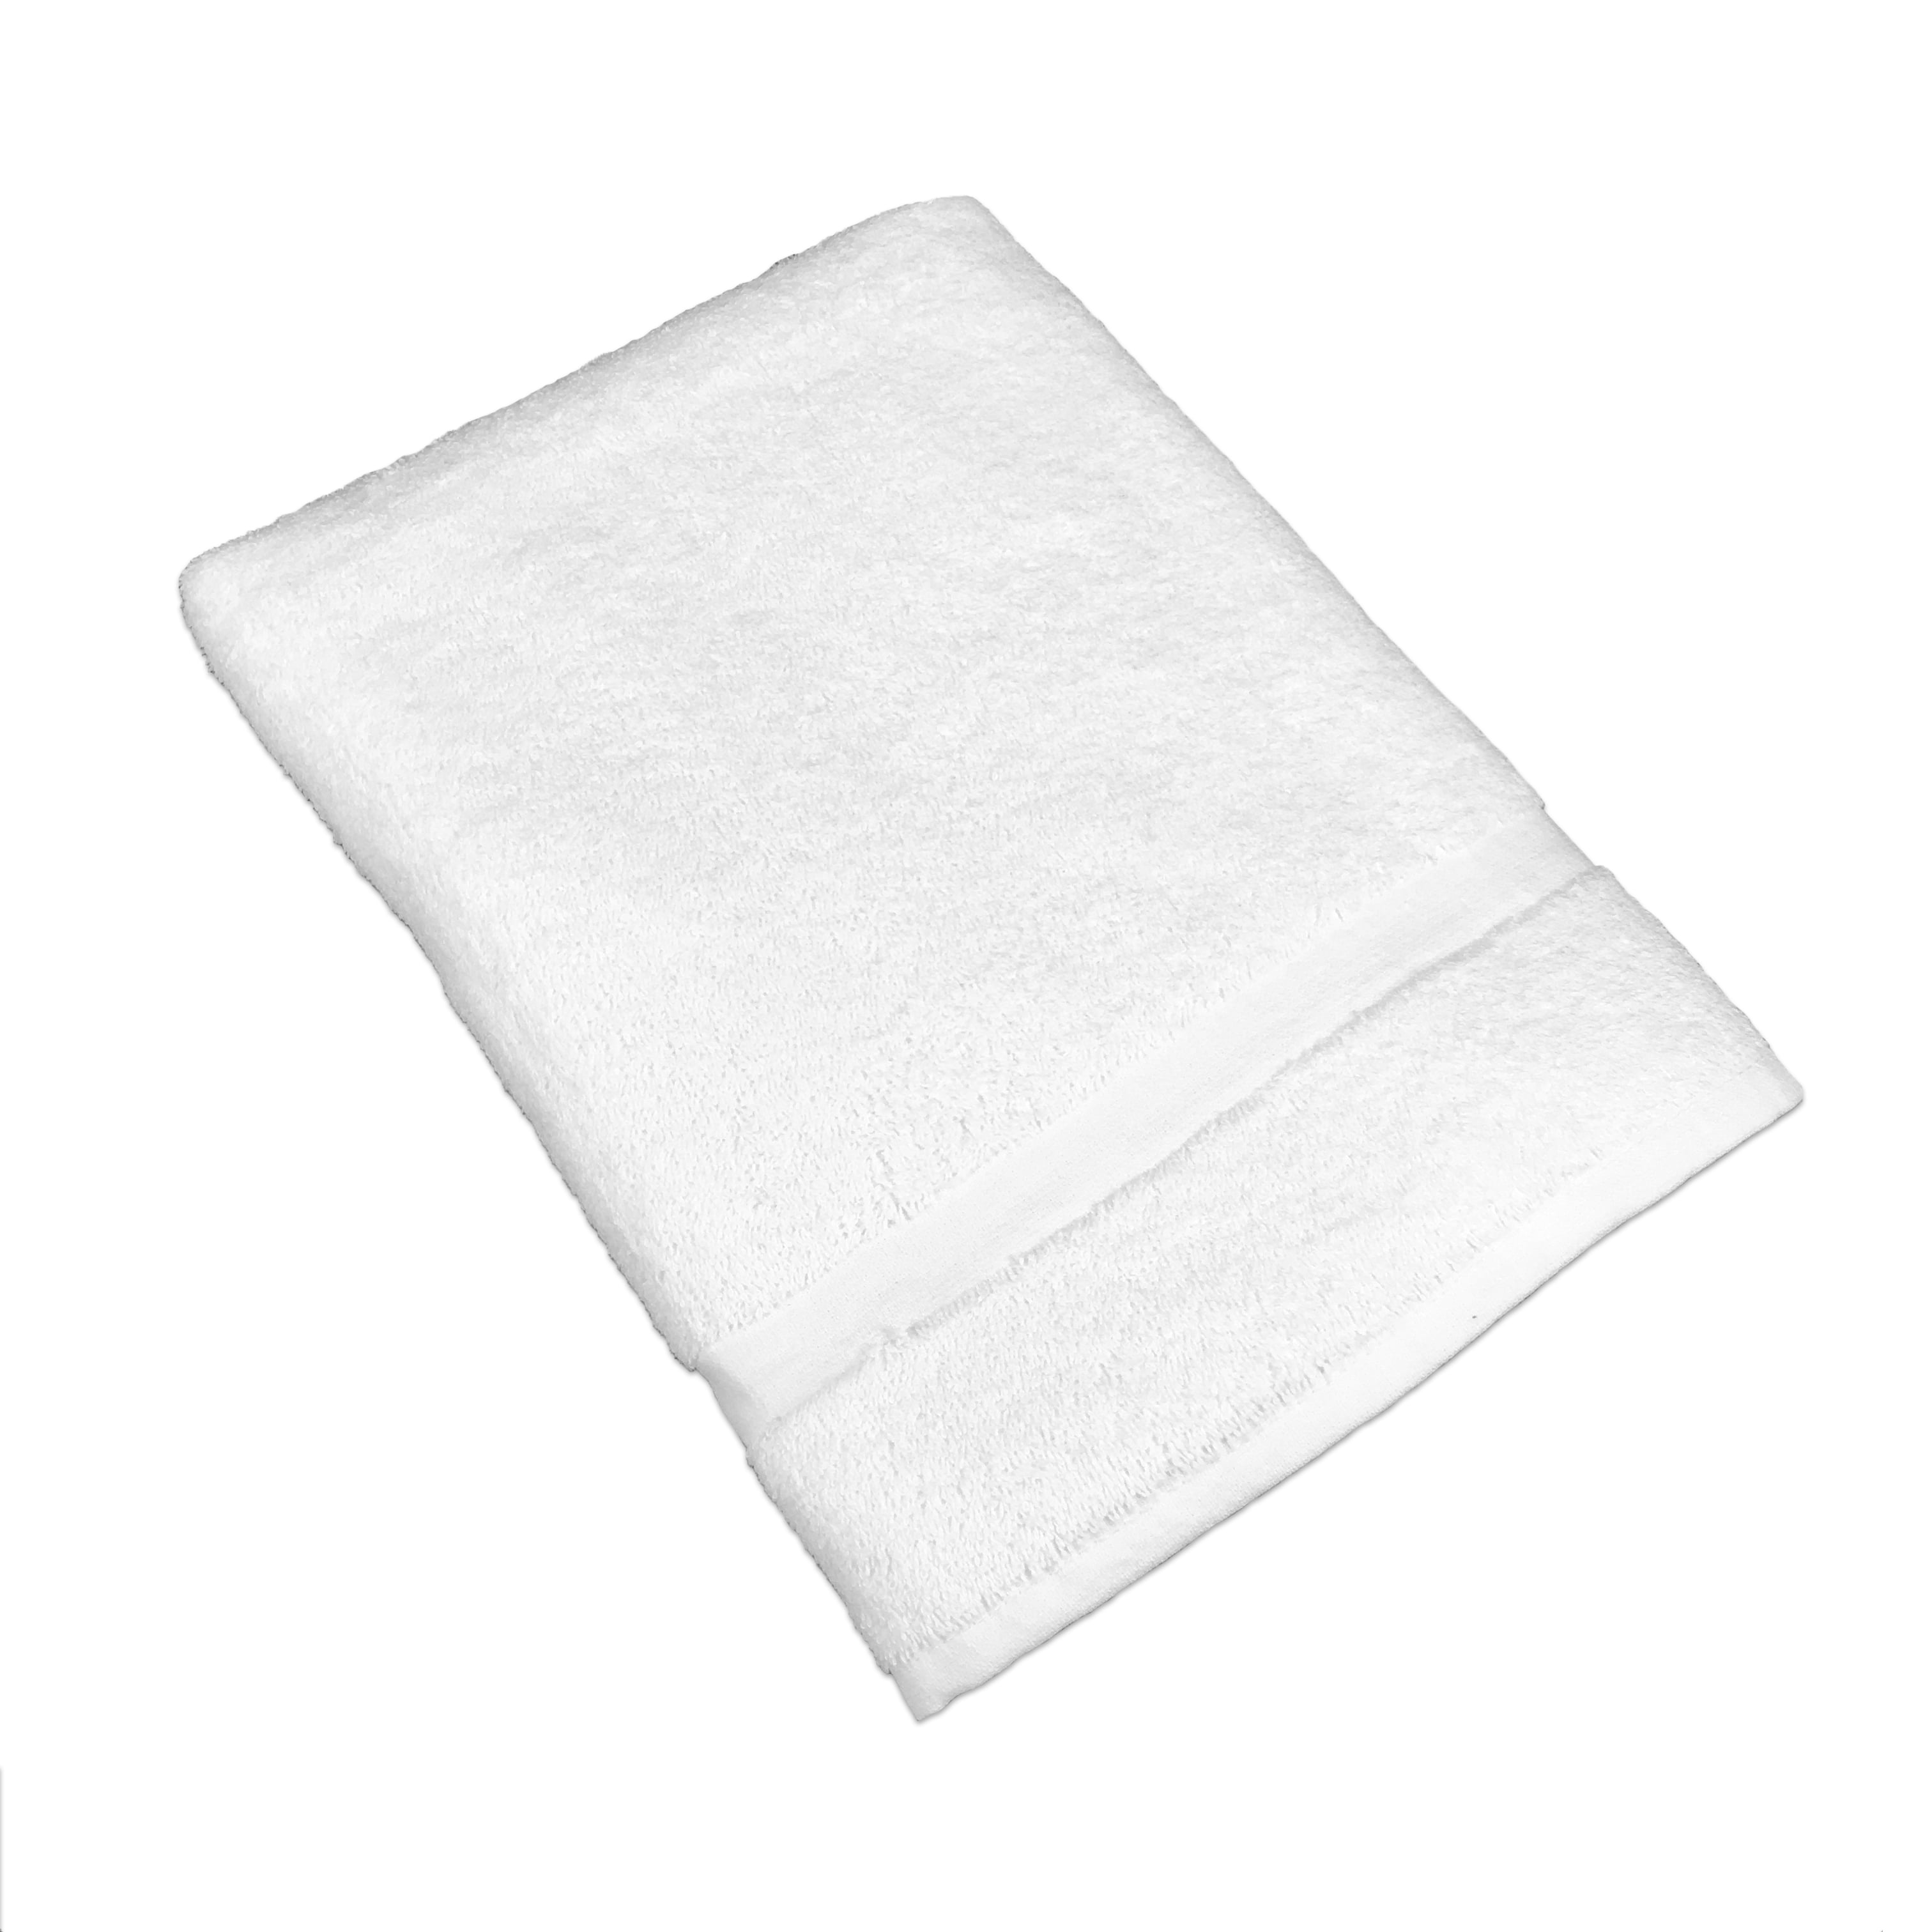 180 Bulk Pack White Economy Bath Towels (24x 48 Inch)